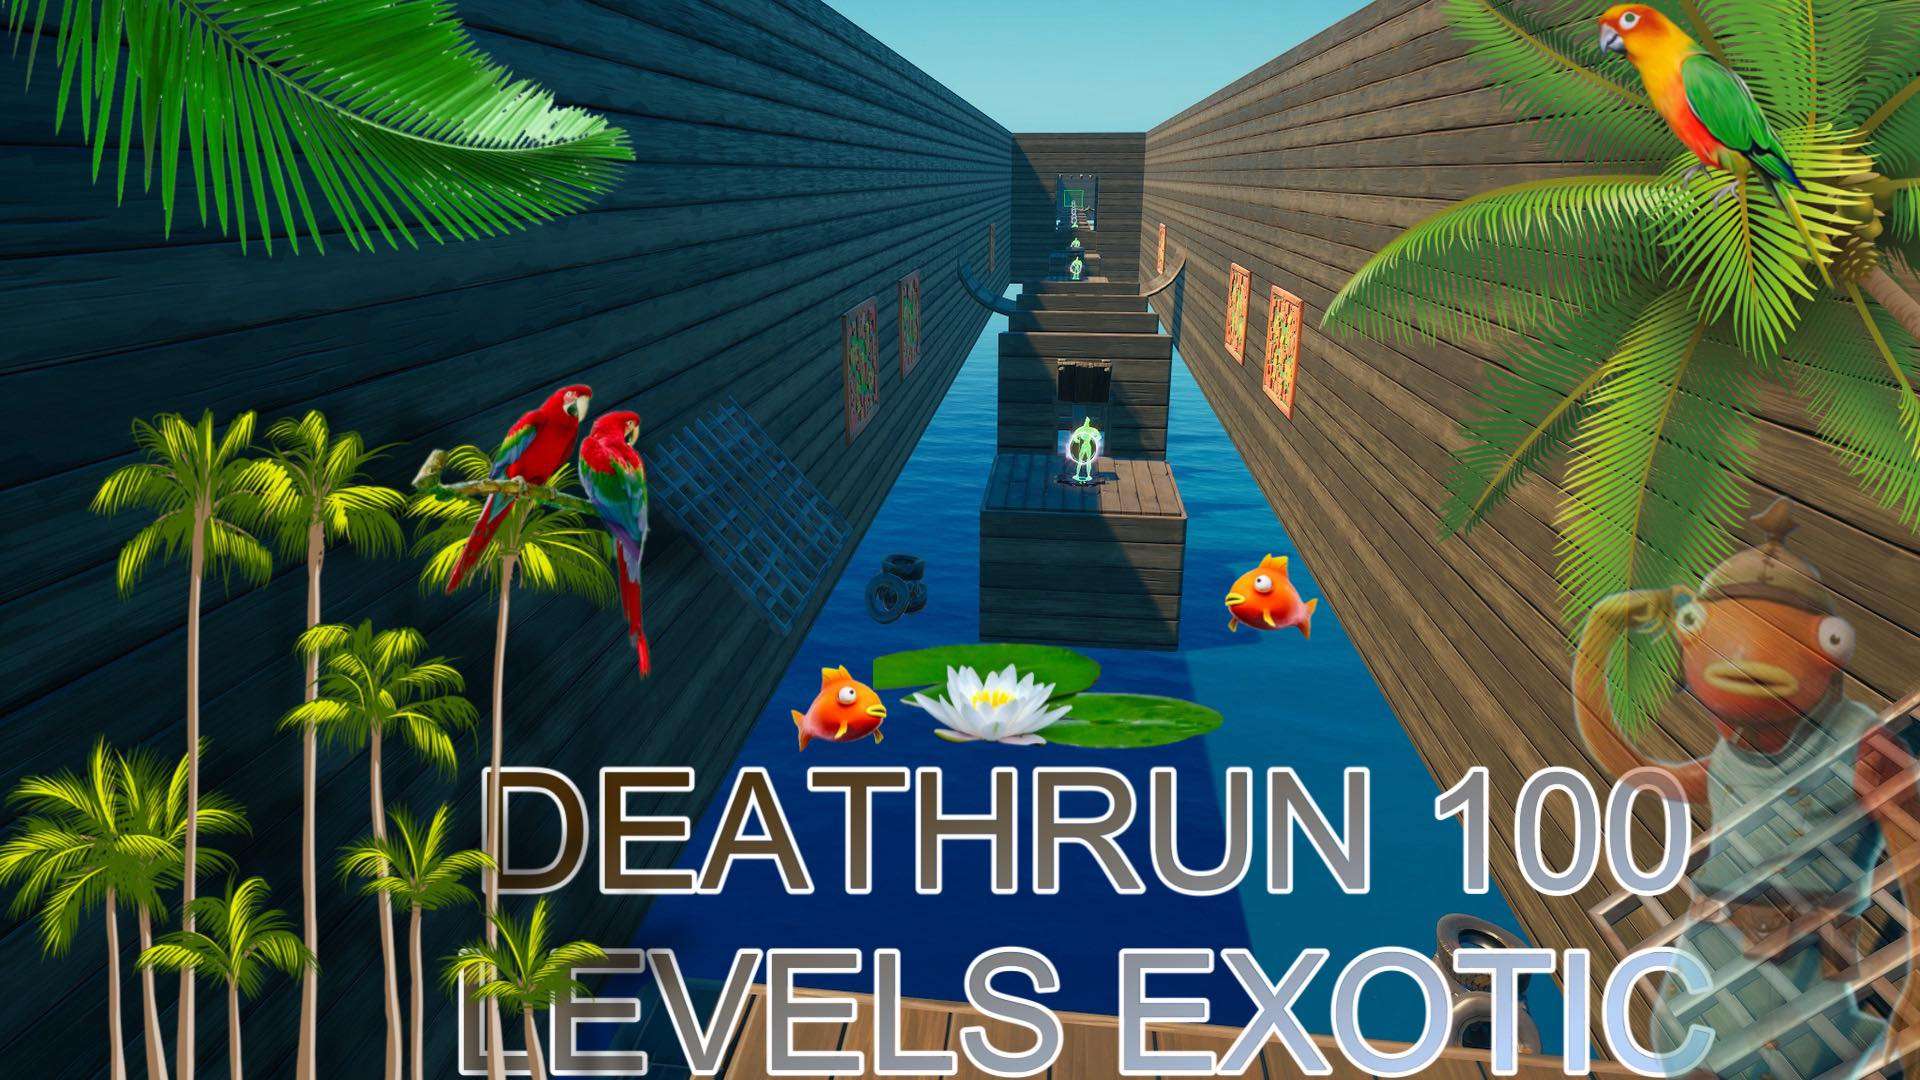 Deathrun 100 exotic levels